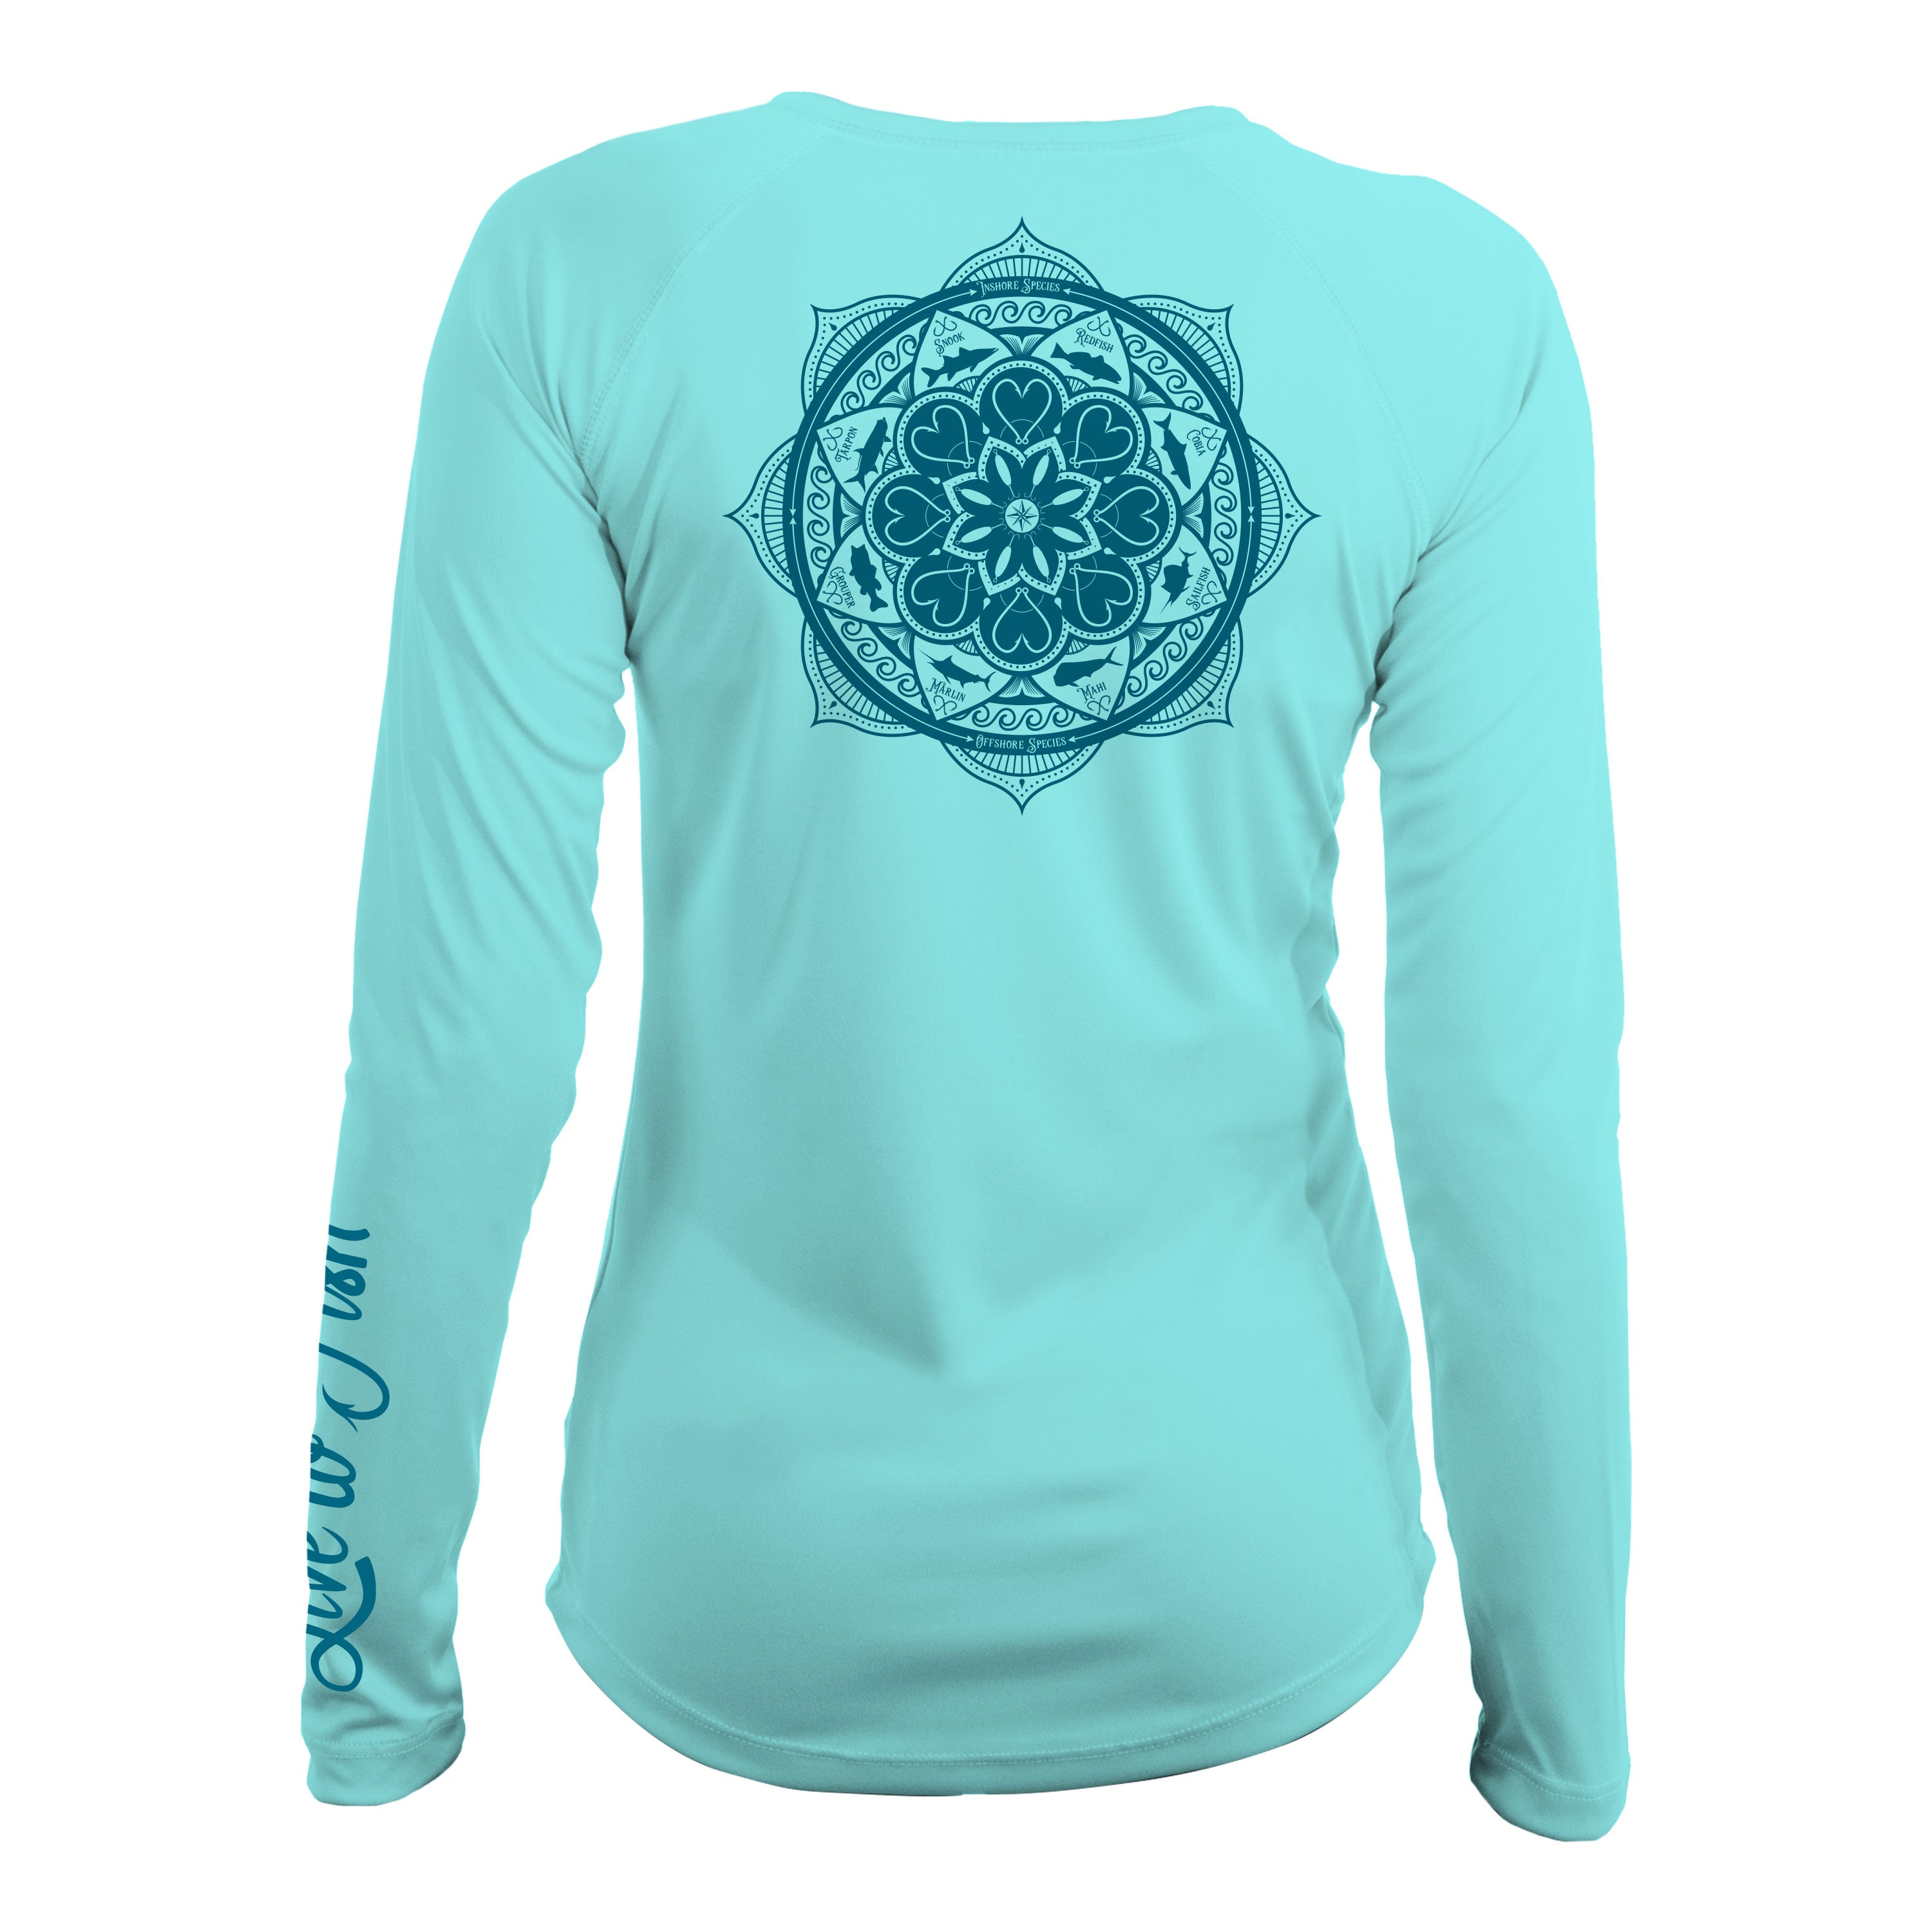 Mandala Women's Long Sleeve UV Shirt, Aqua Blue